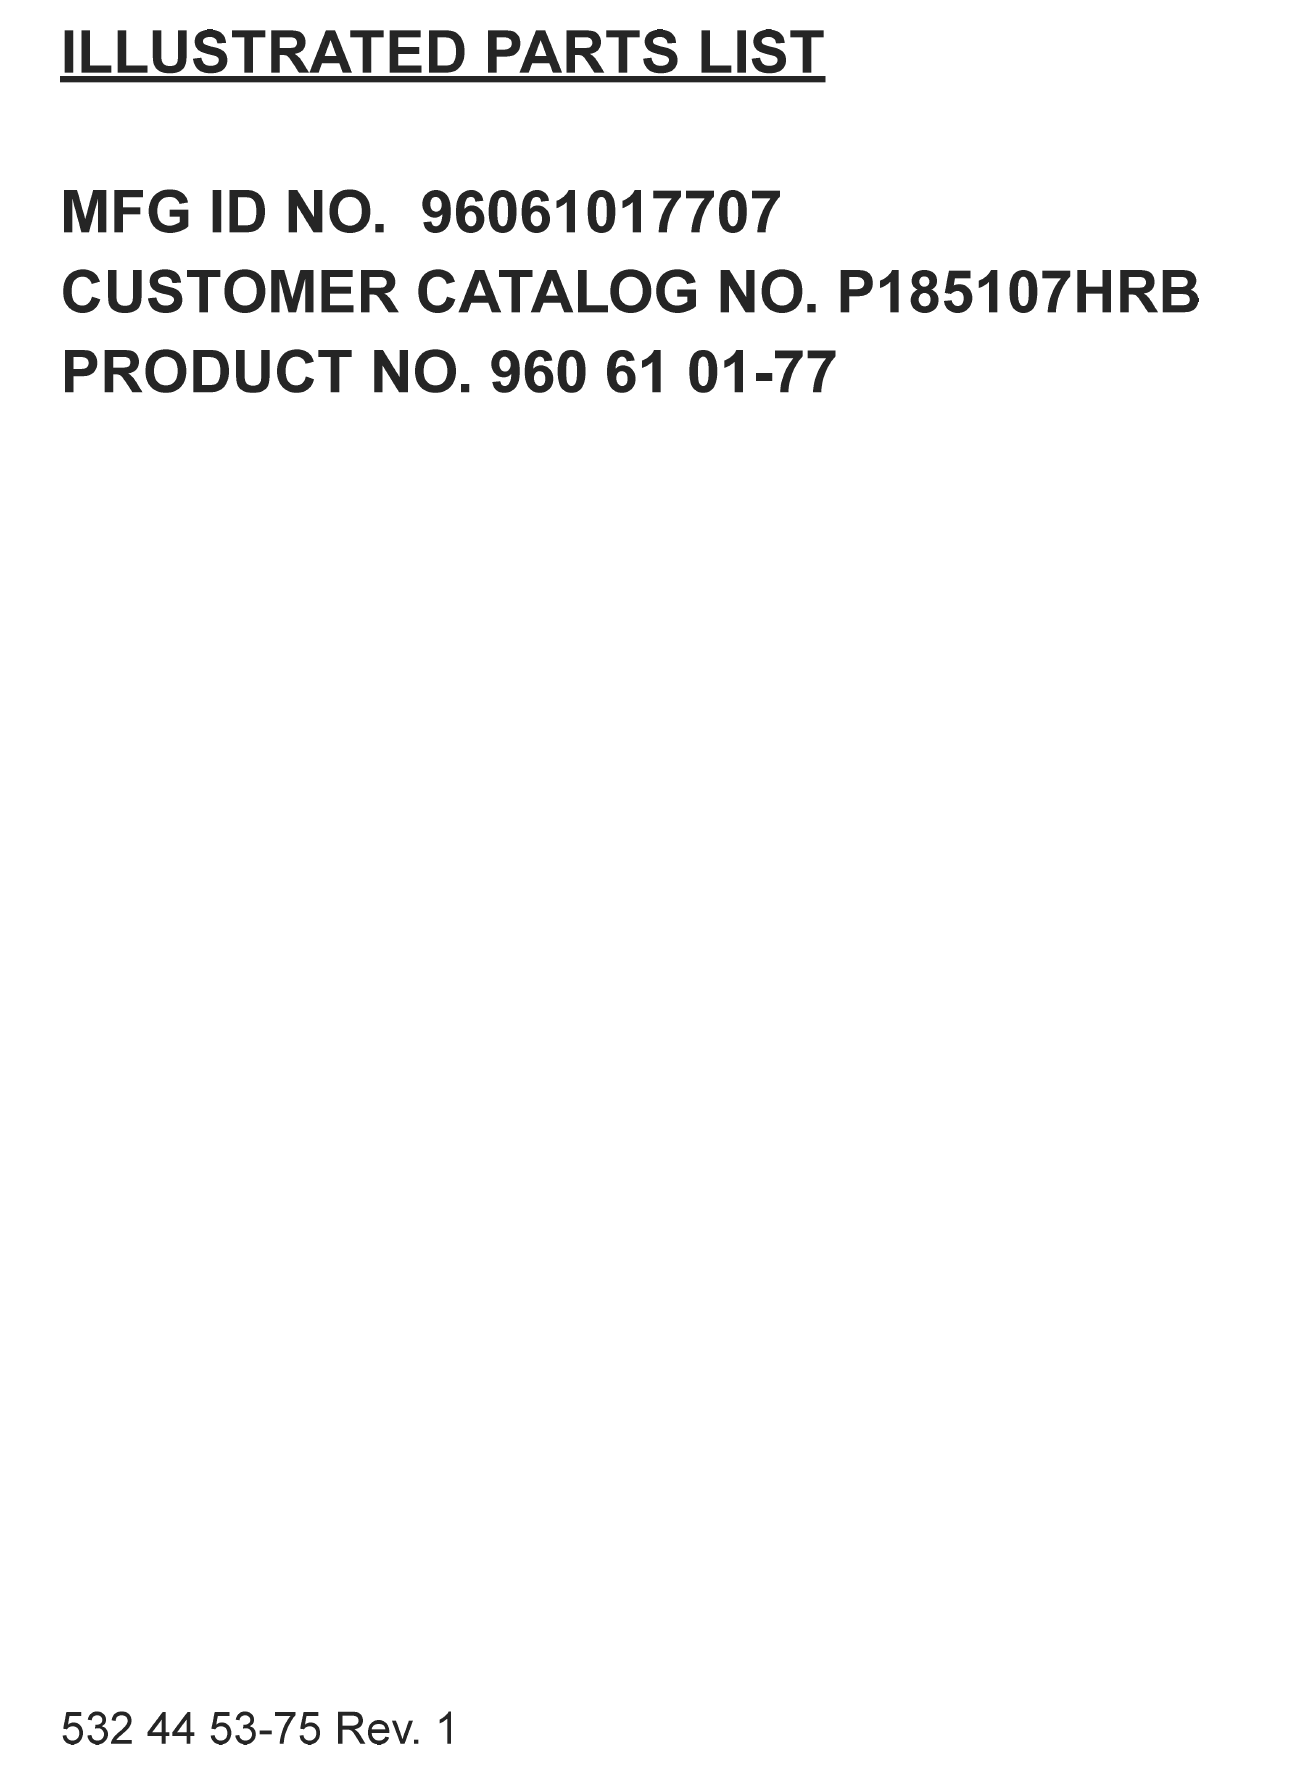 Partner P185107HRB (2011-08) (96061017707)